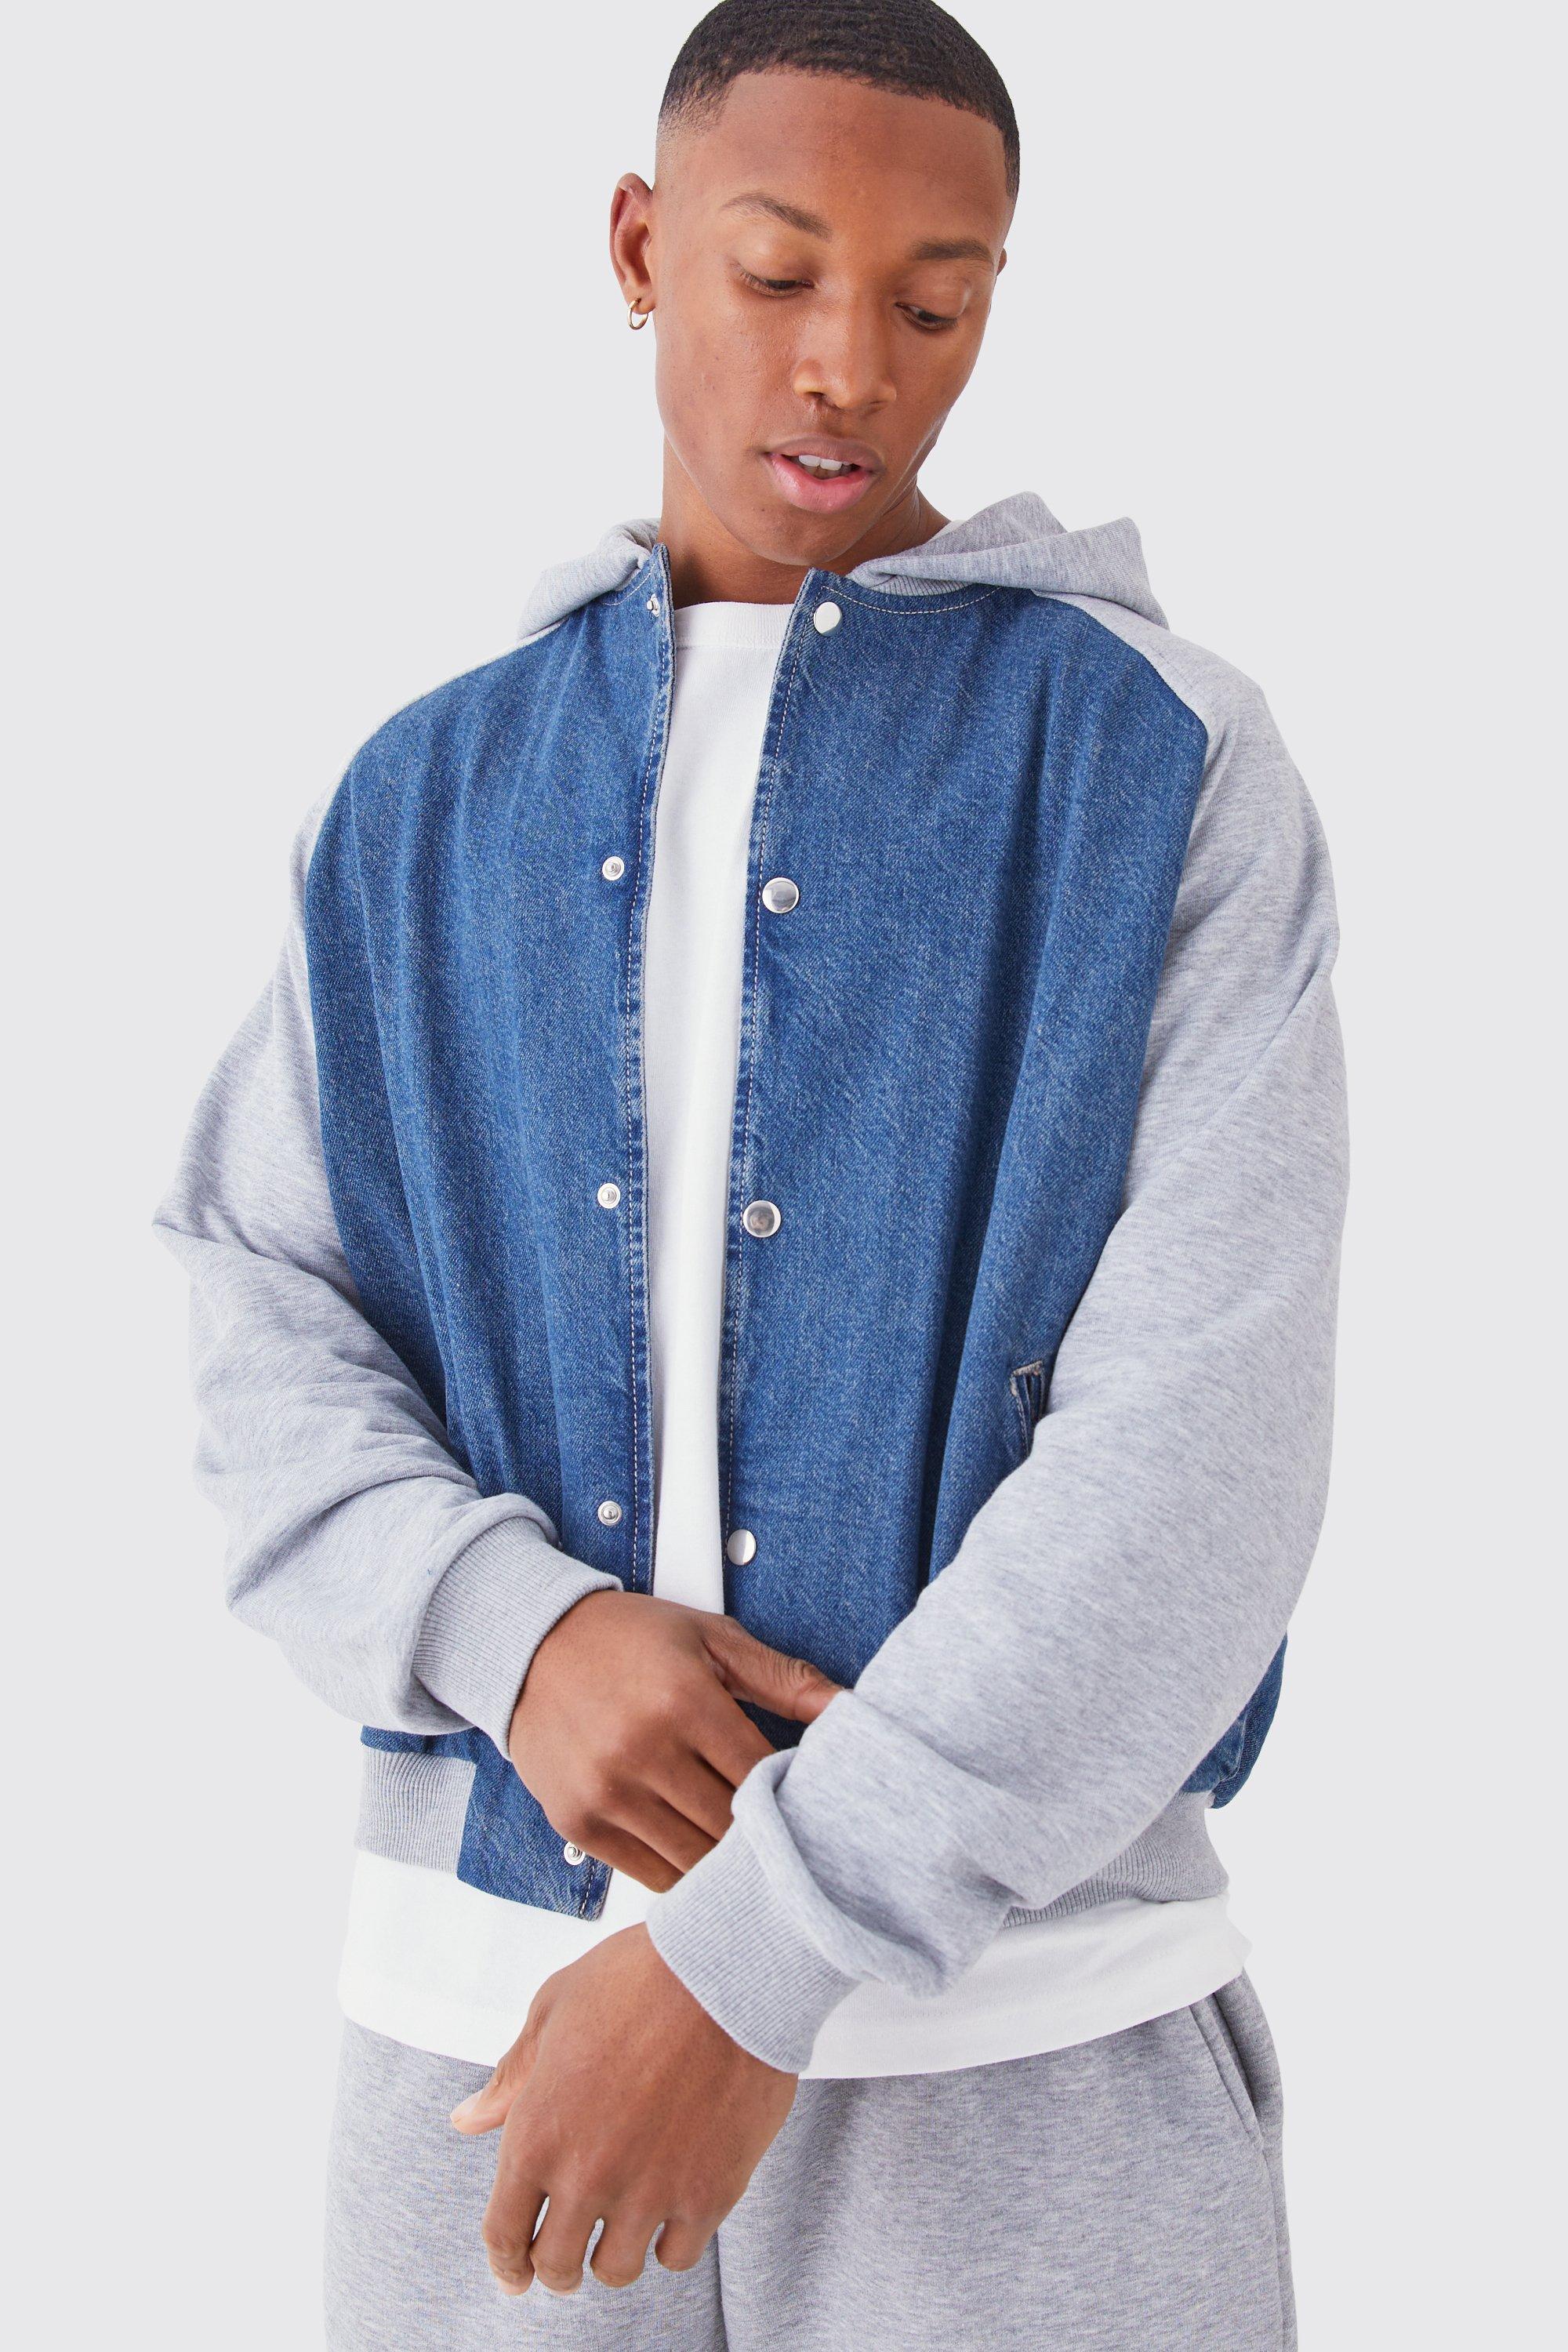 Carhartt WIP denim jacket men's navy blue color | buy on PRM